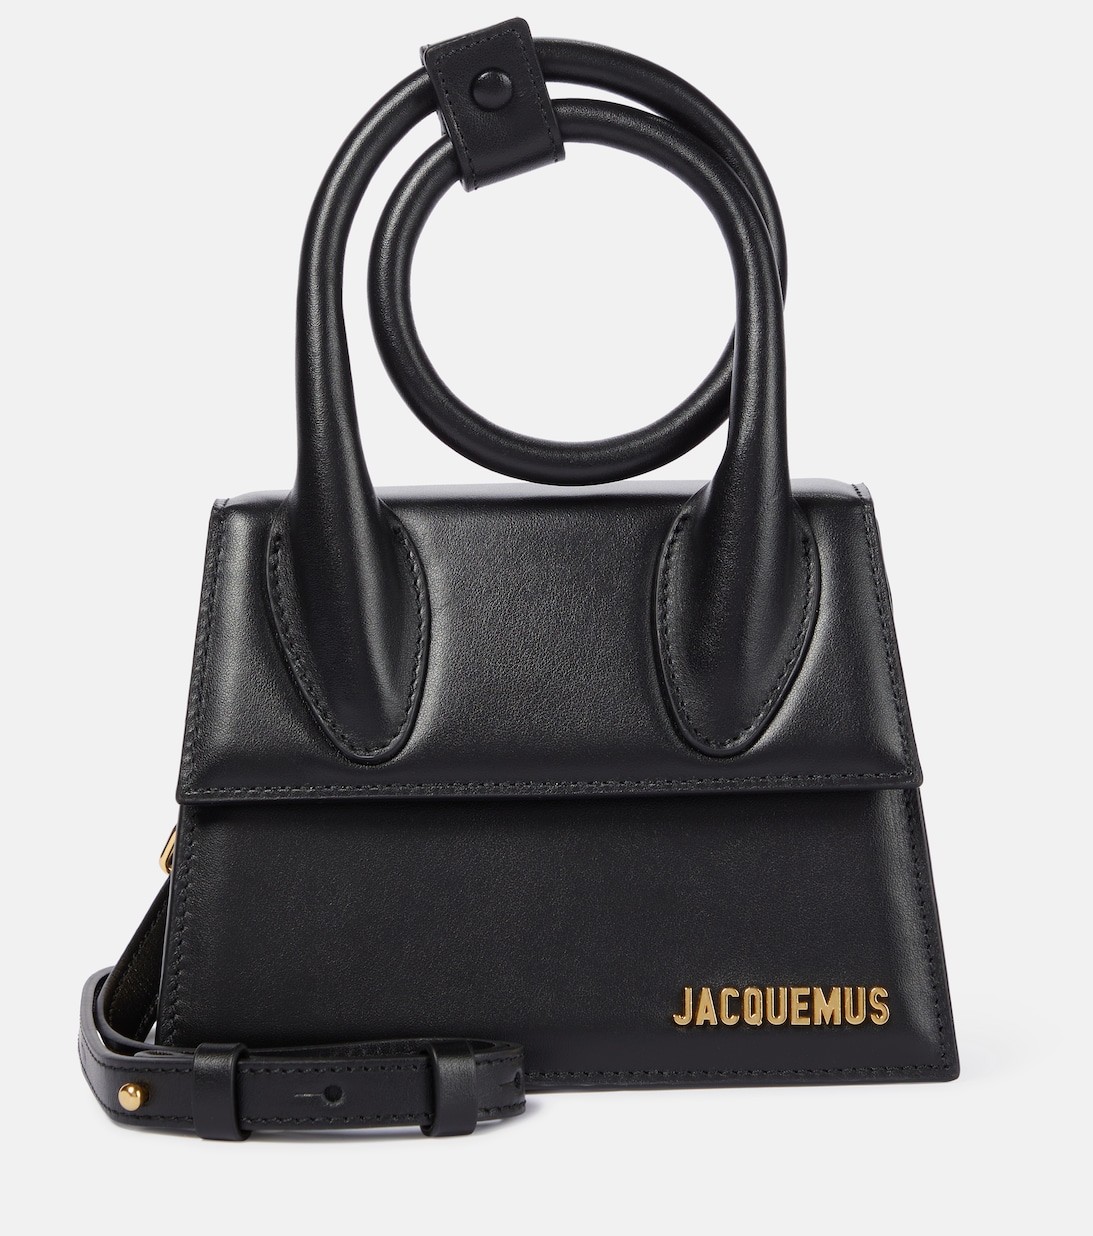 Jacquemus - Le Chiquito Noeud Bag - Black